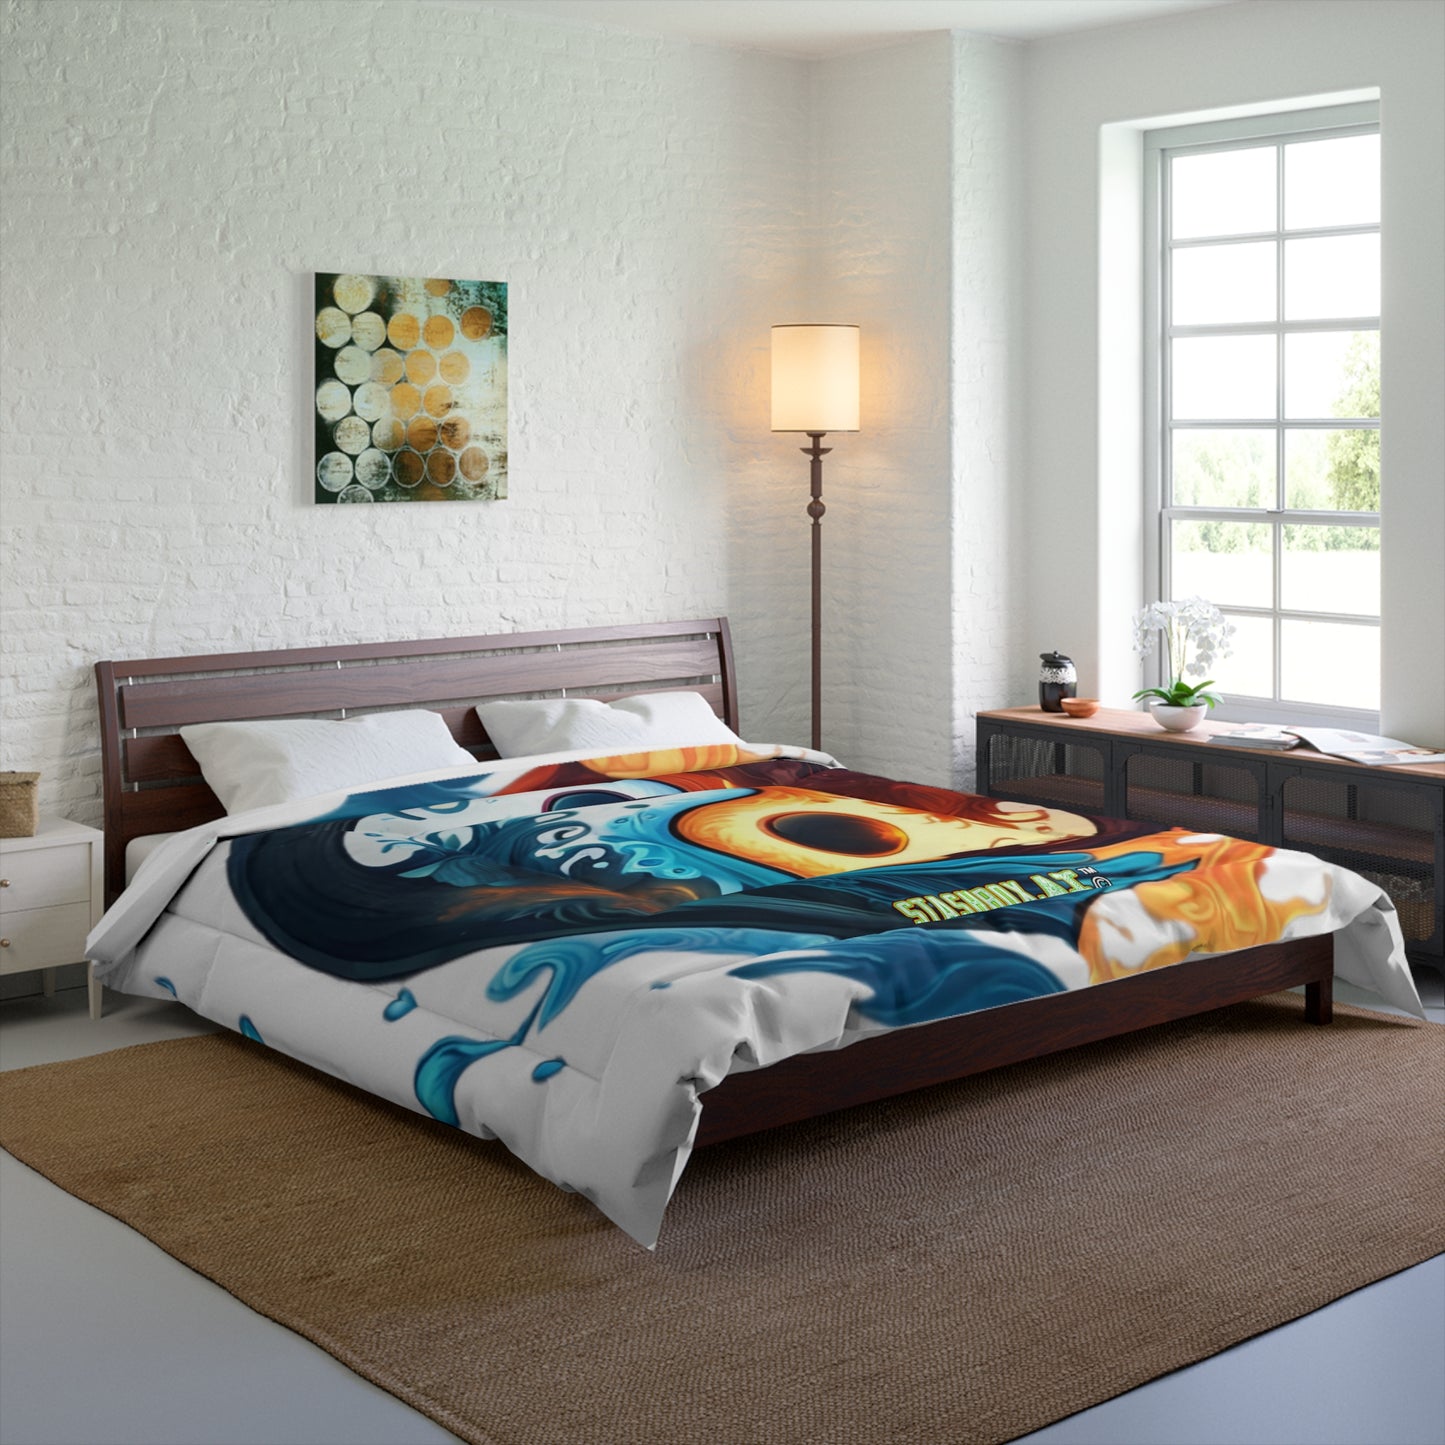 Bedding Comforter Artistic Yin Yang by Joel Lovett Design 001